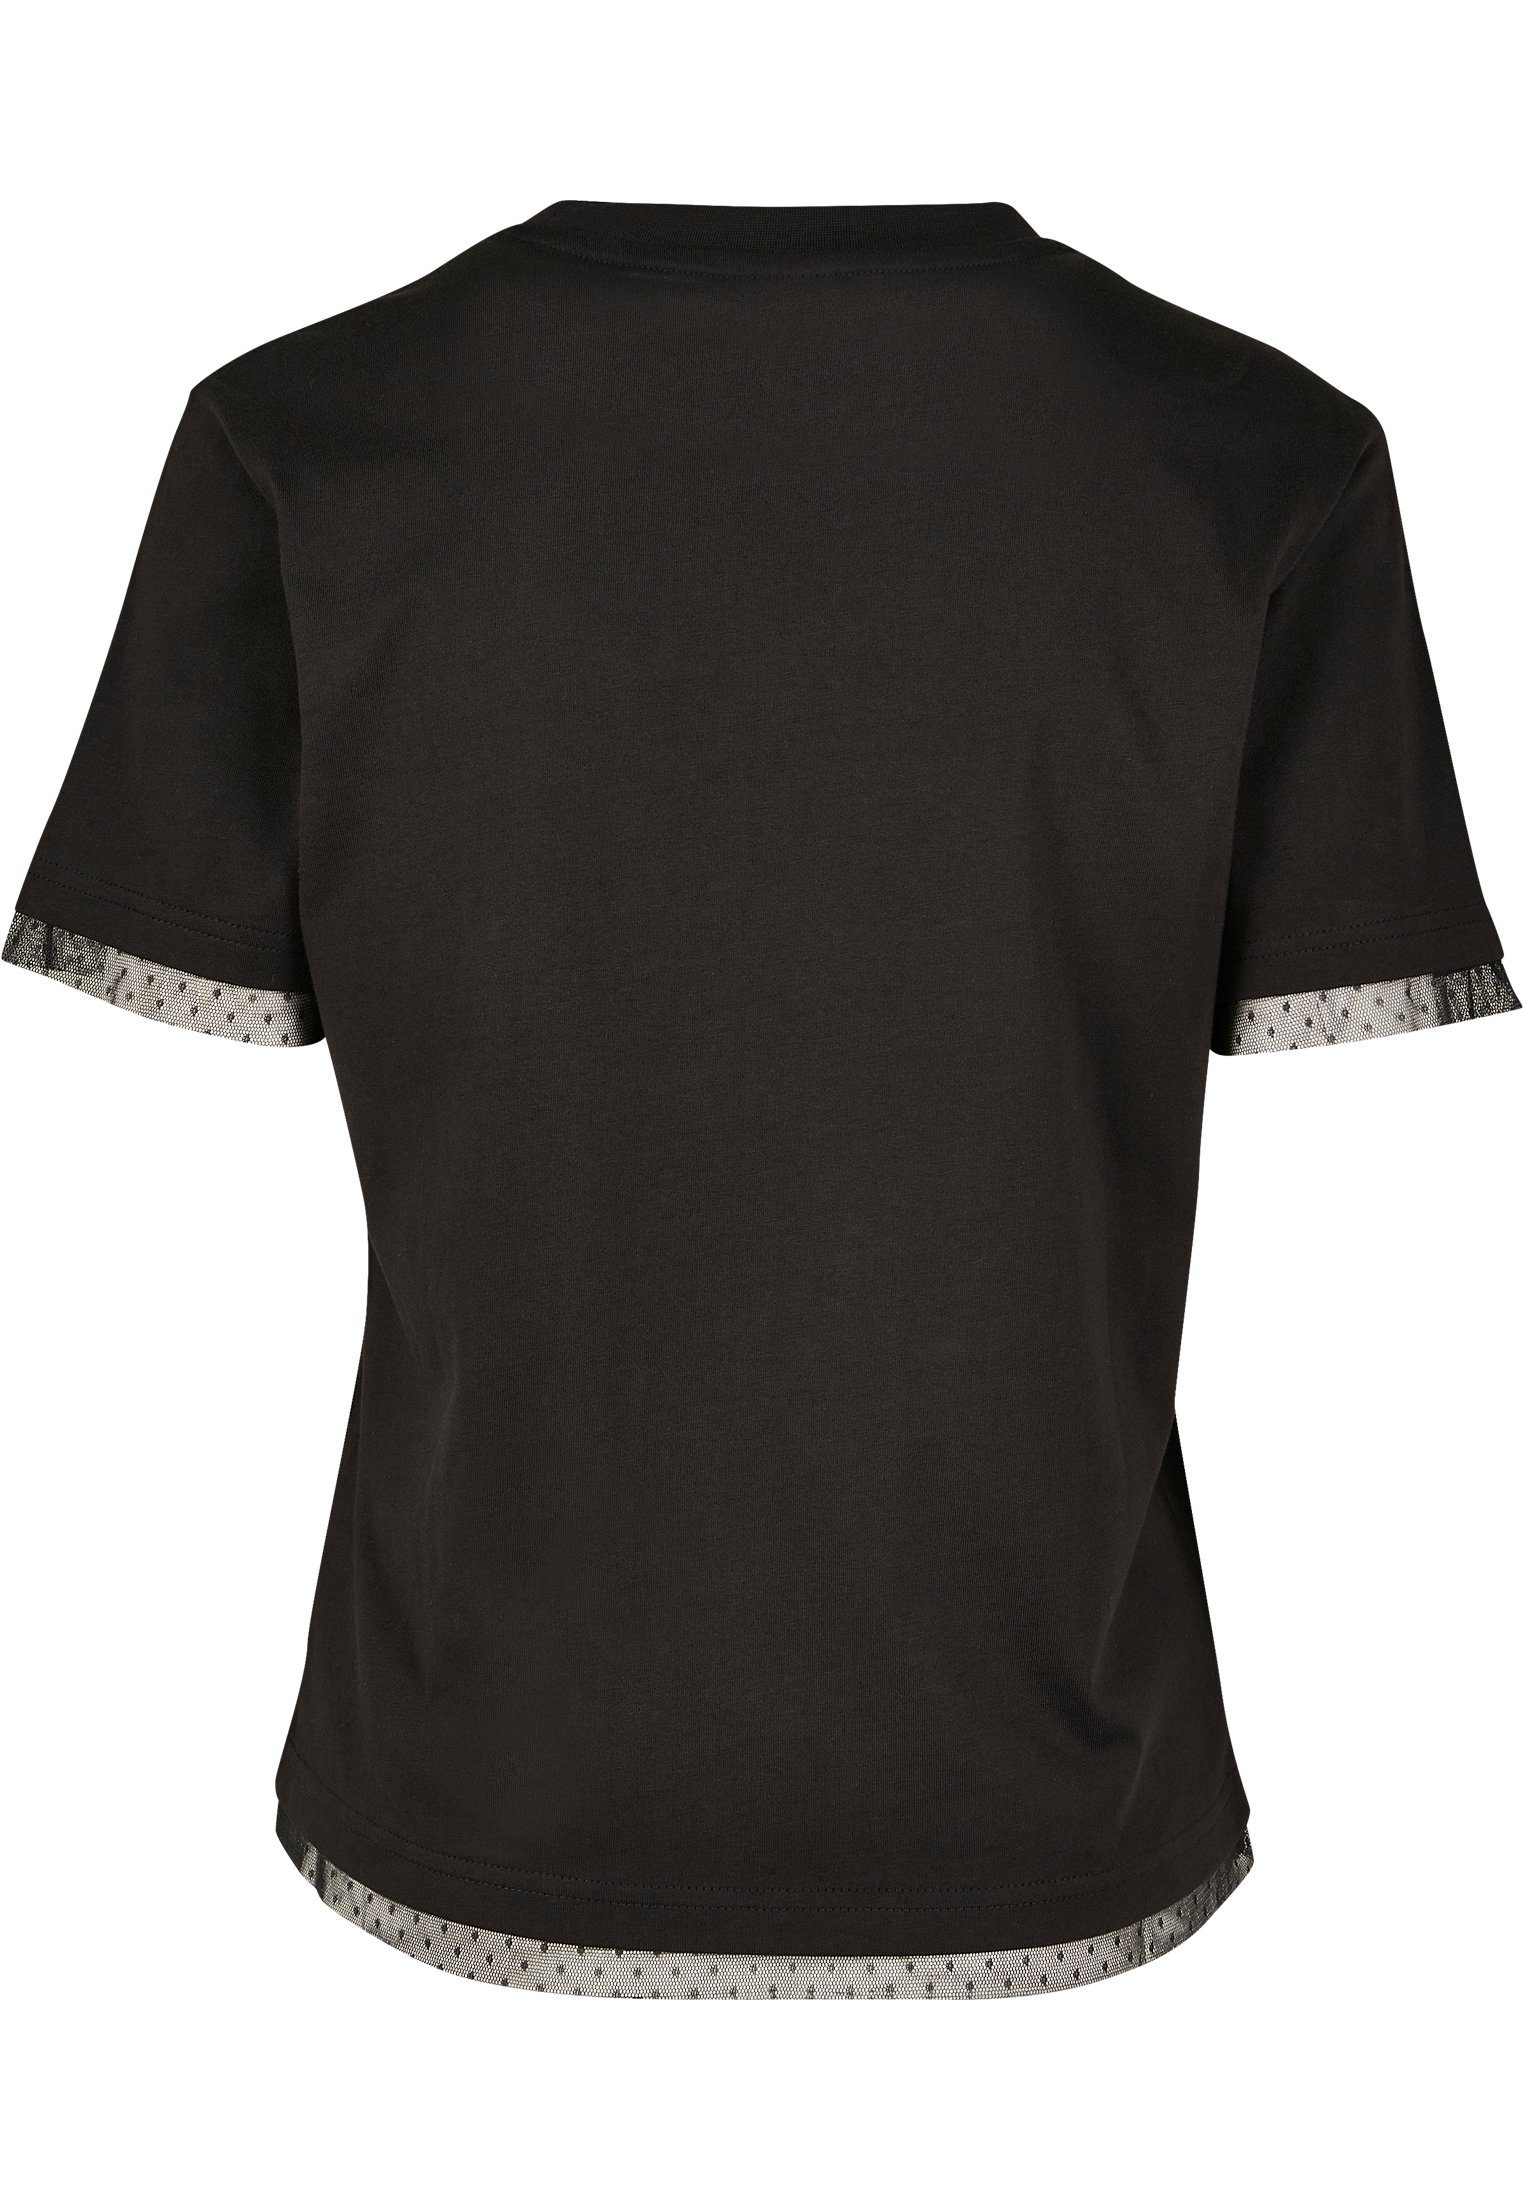 URBAN black Boxy TB2800 CLASSICS Hem T-Shirt Lace